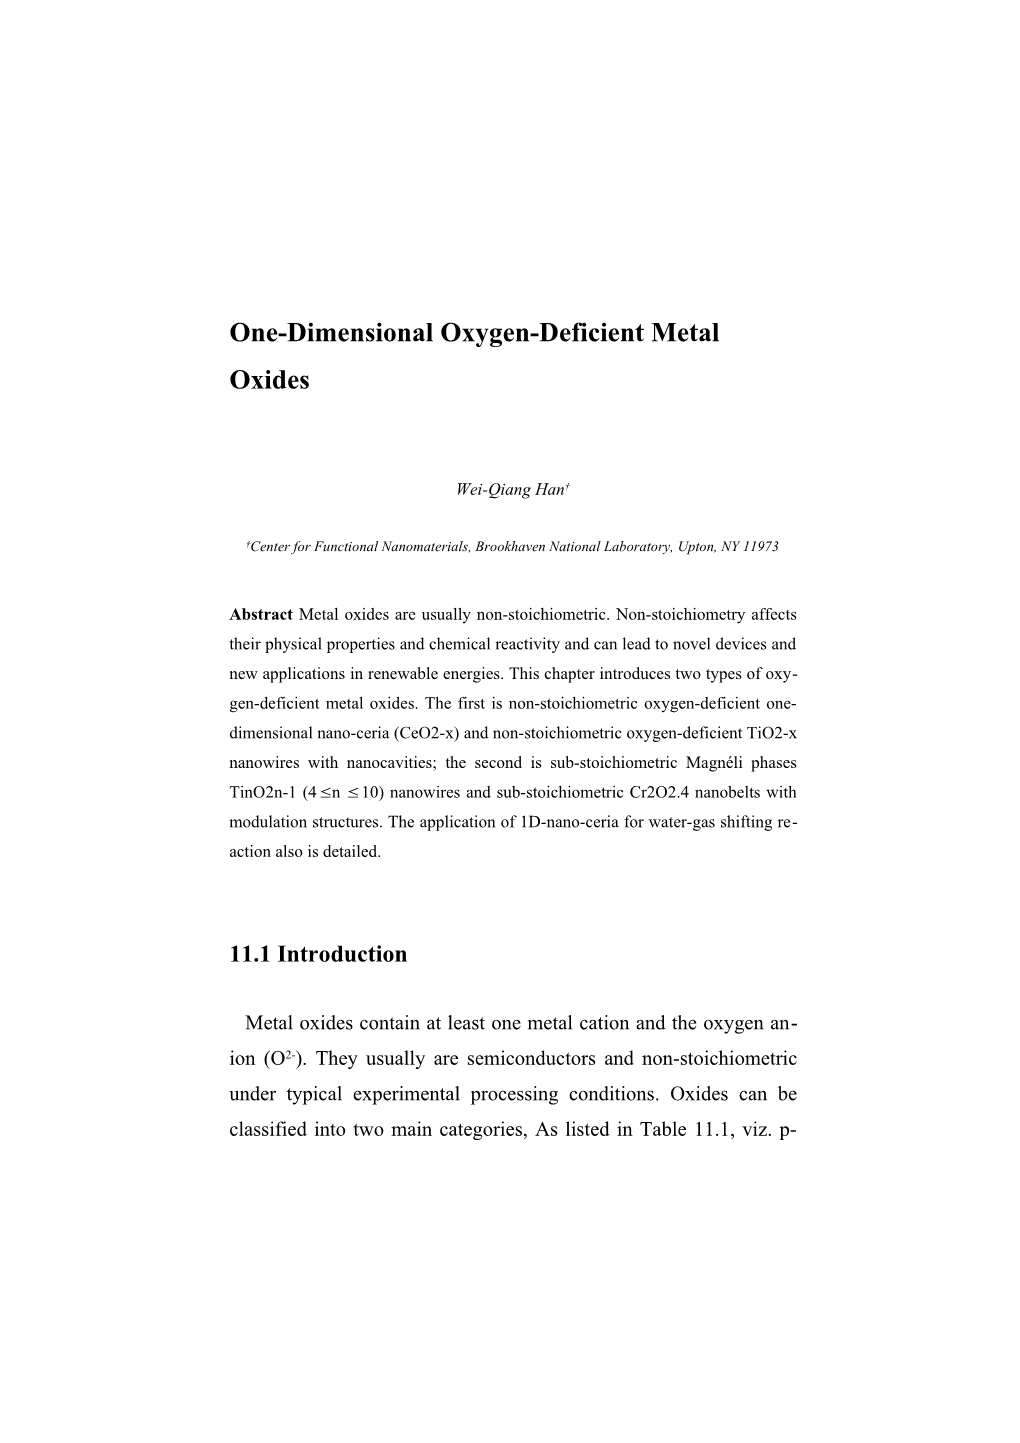 One-Dimensional Oxygen-Deficient Metal Oxides